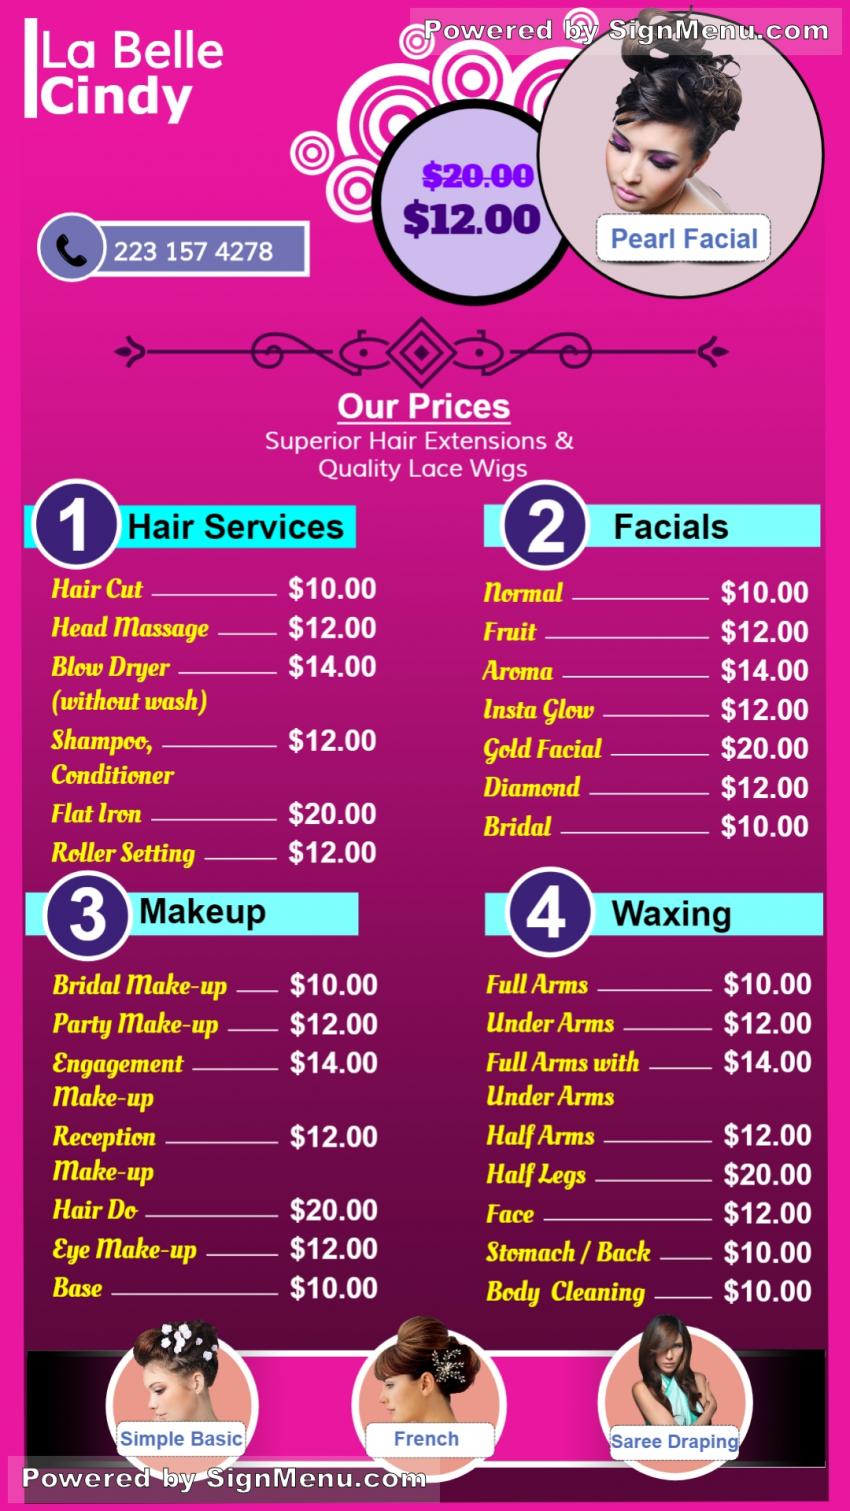 Signmenu : Digital signage menu board of a beauty salon.